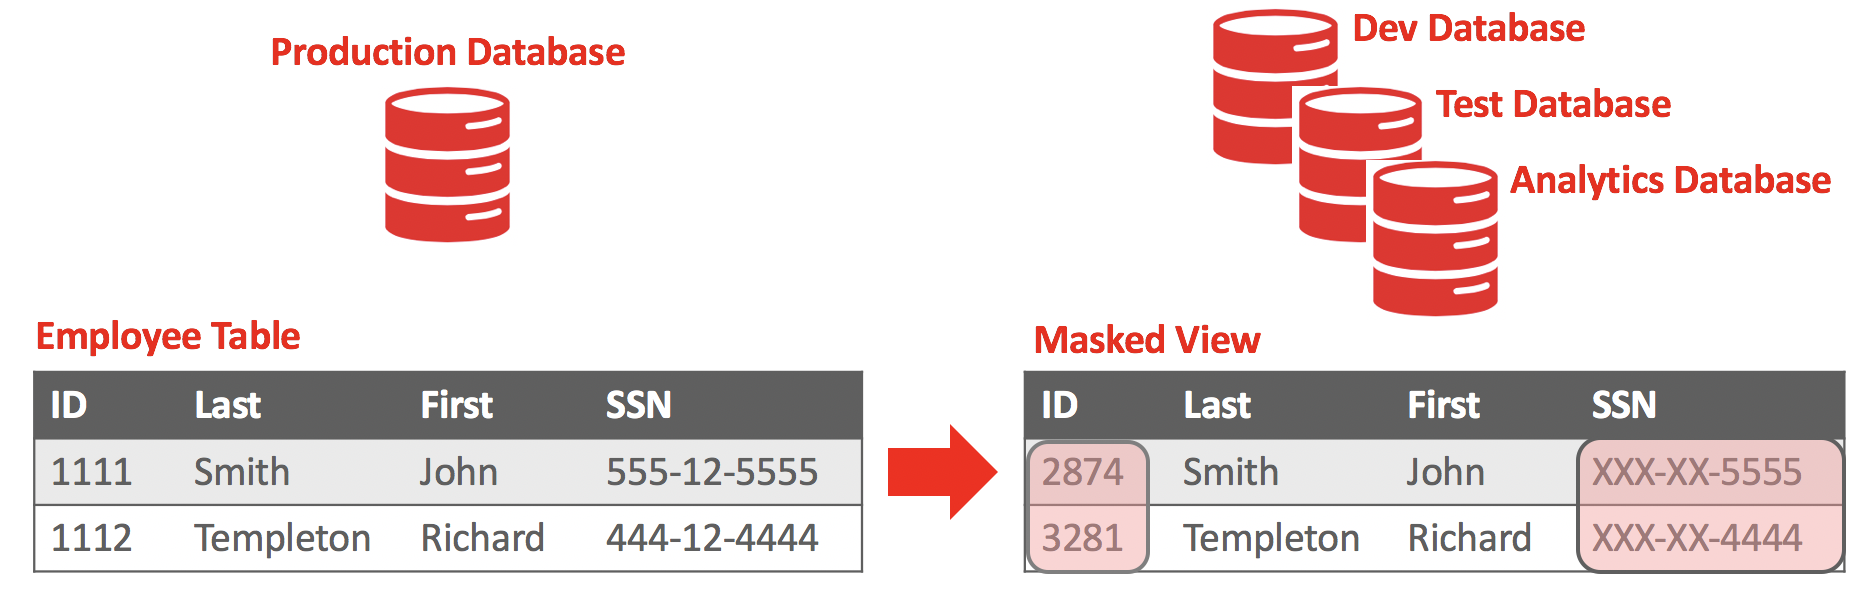 MySQL Enterprise Masking and De-identificaiton protects sensitive data from unauthorized users.